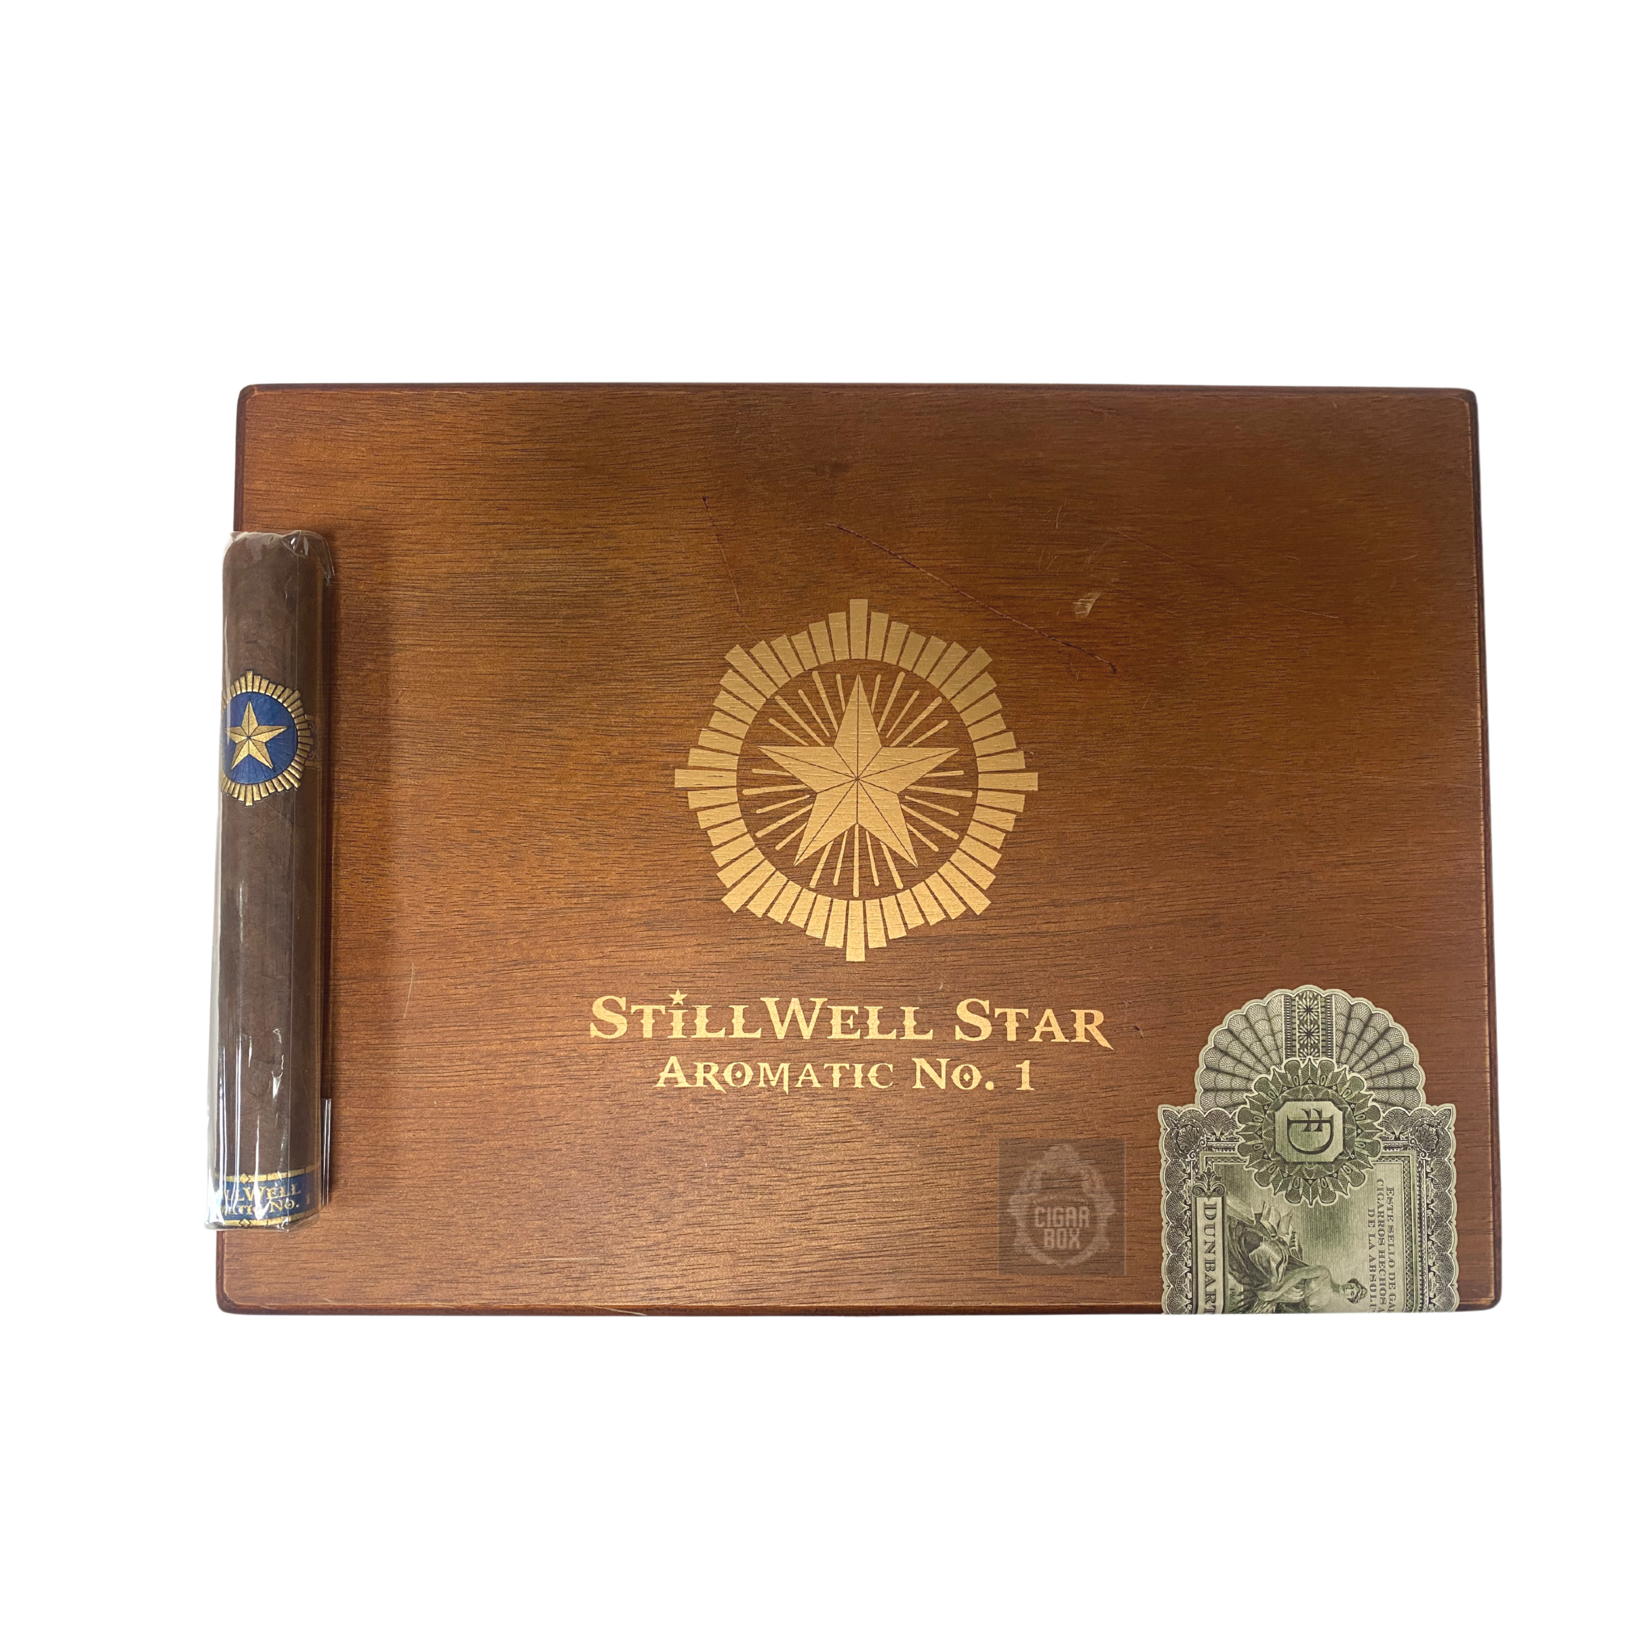 Stillwell Star StillWell Star Aromatic No. 1 Box